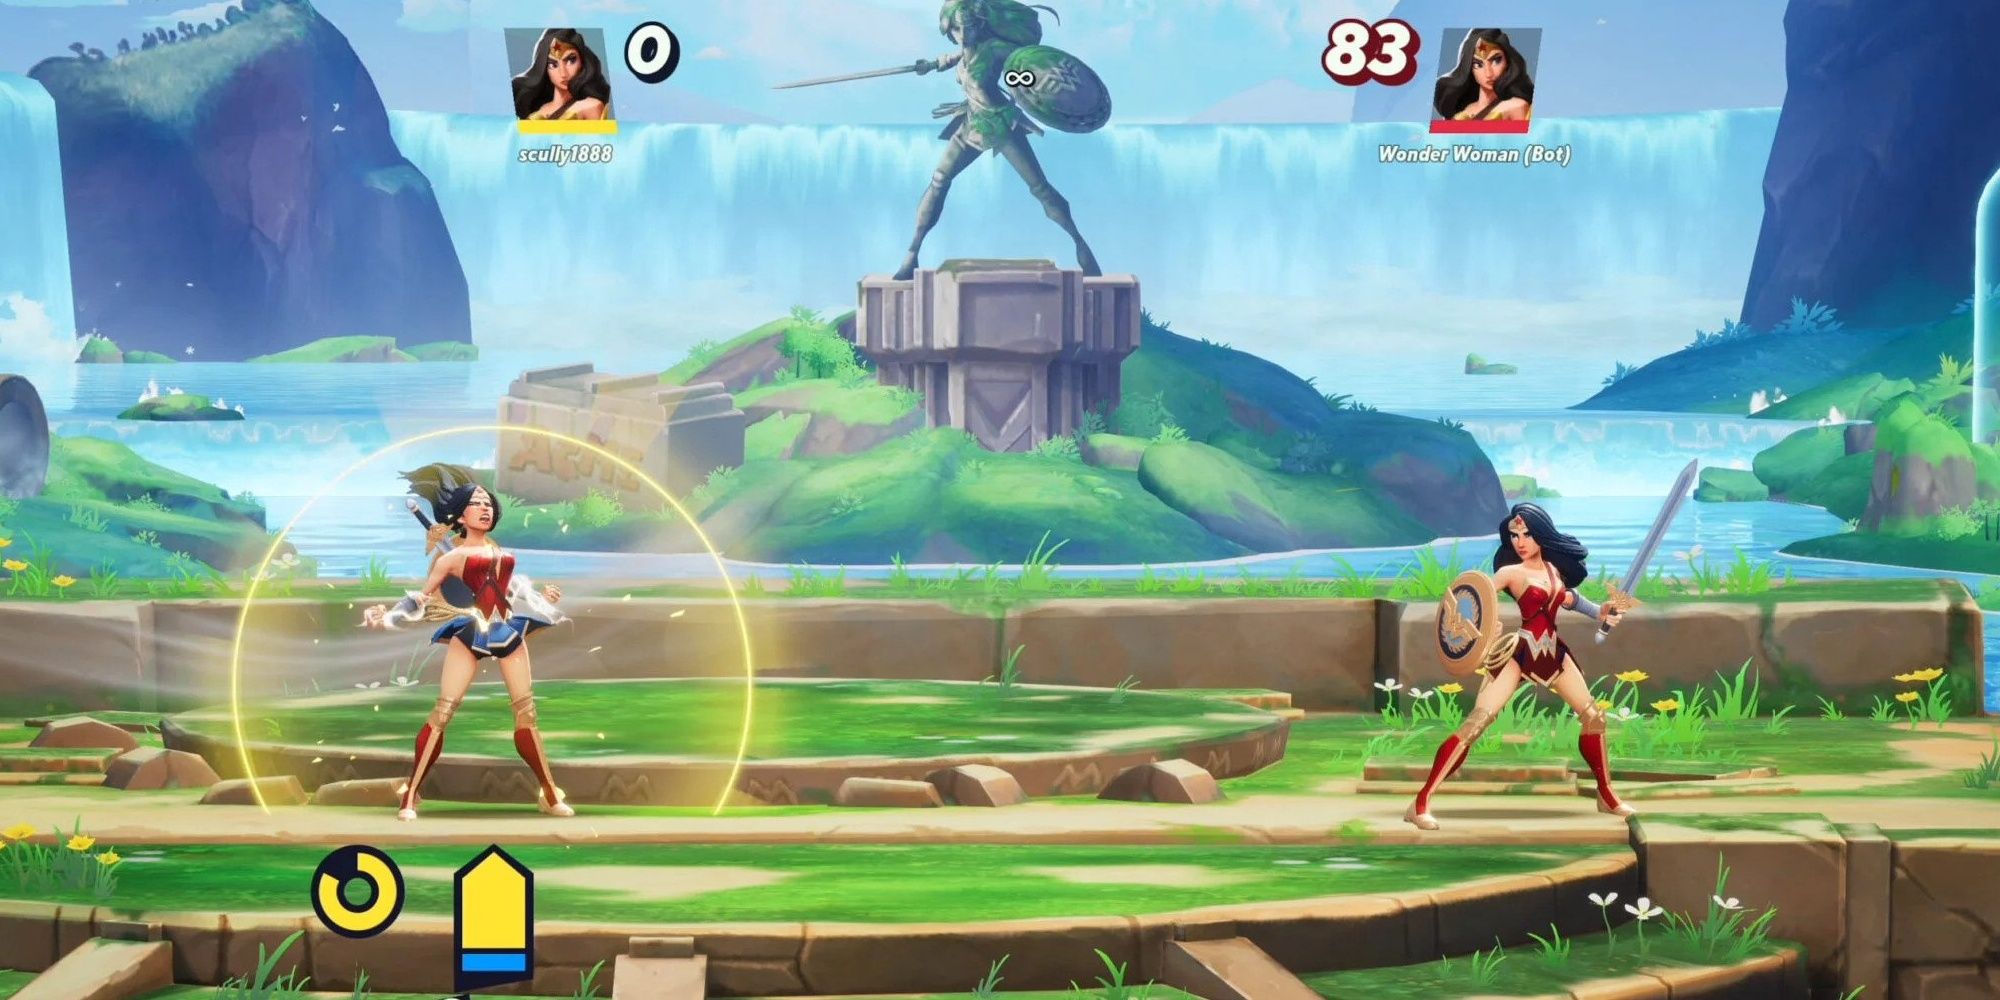 Wonder Woman fighting a bot version of herself in MultiVersus